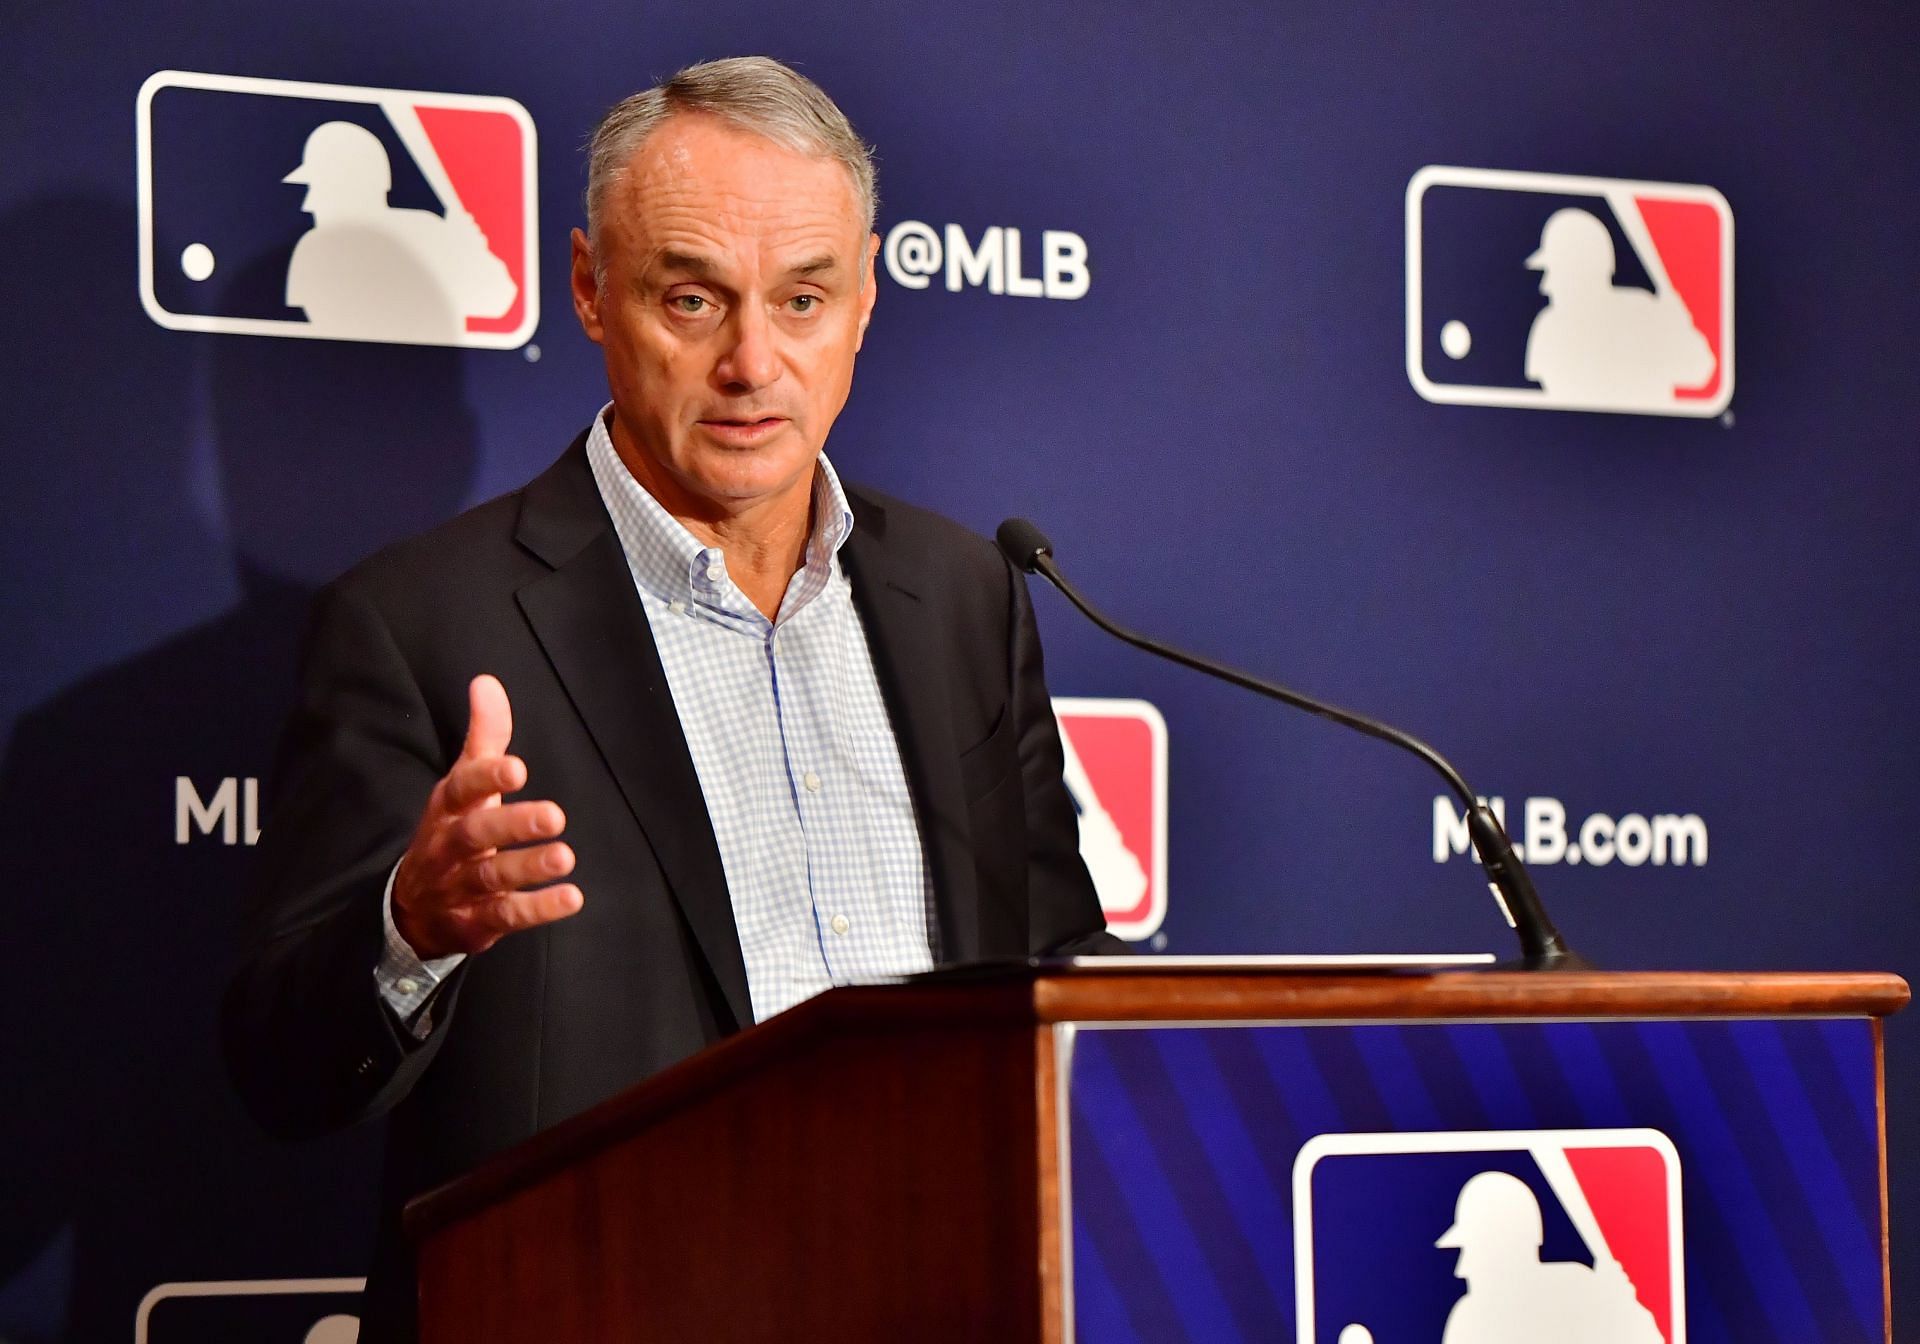 MLB Commissioner Rob Manfred (Image via Getty)